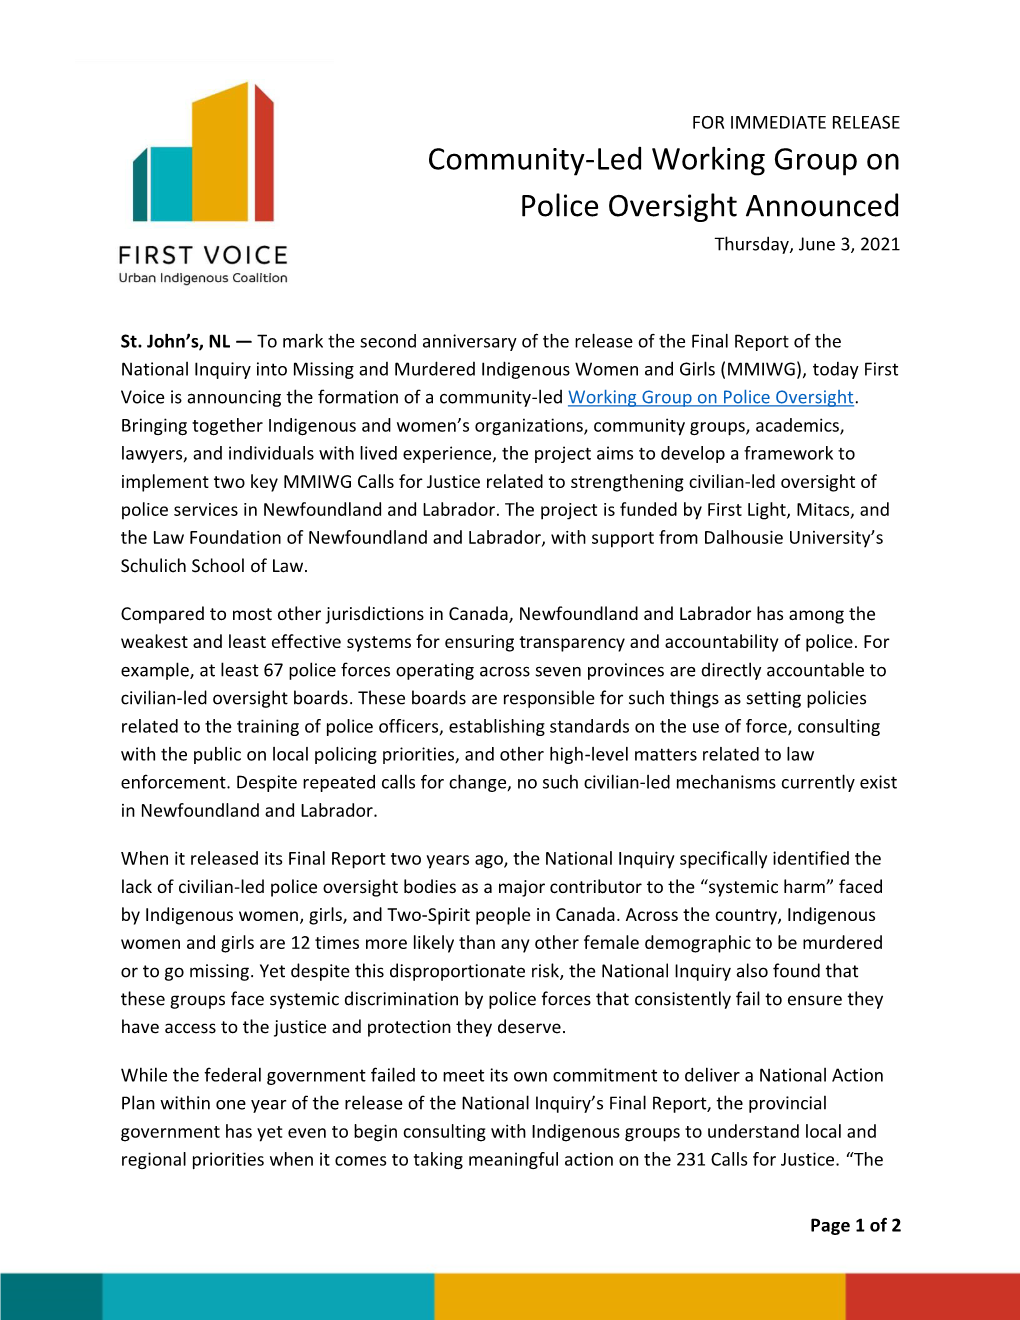 Community-Led Working Group on Police Oversight Announced Thursday, June 3, 2021